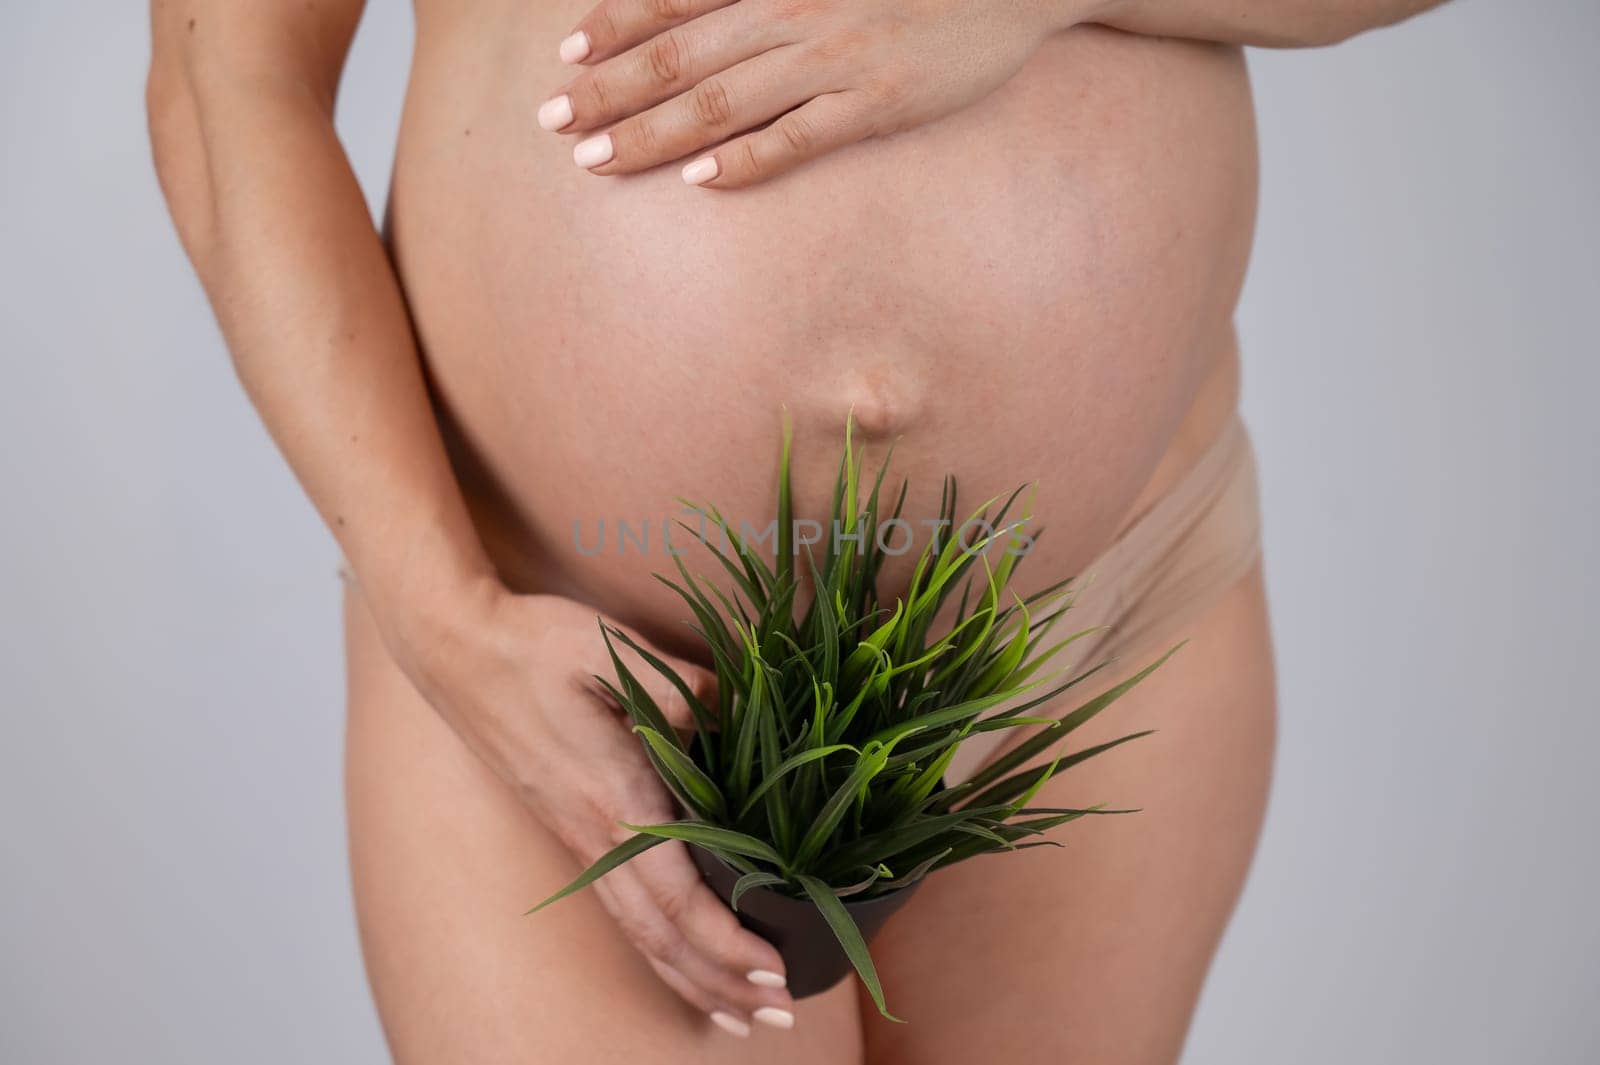 Faceless pregnant woman holding a plant. Metaphor for epilation of the bikini area